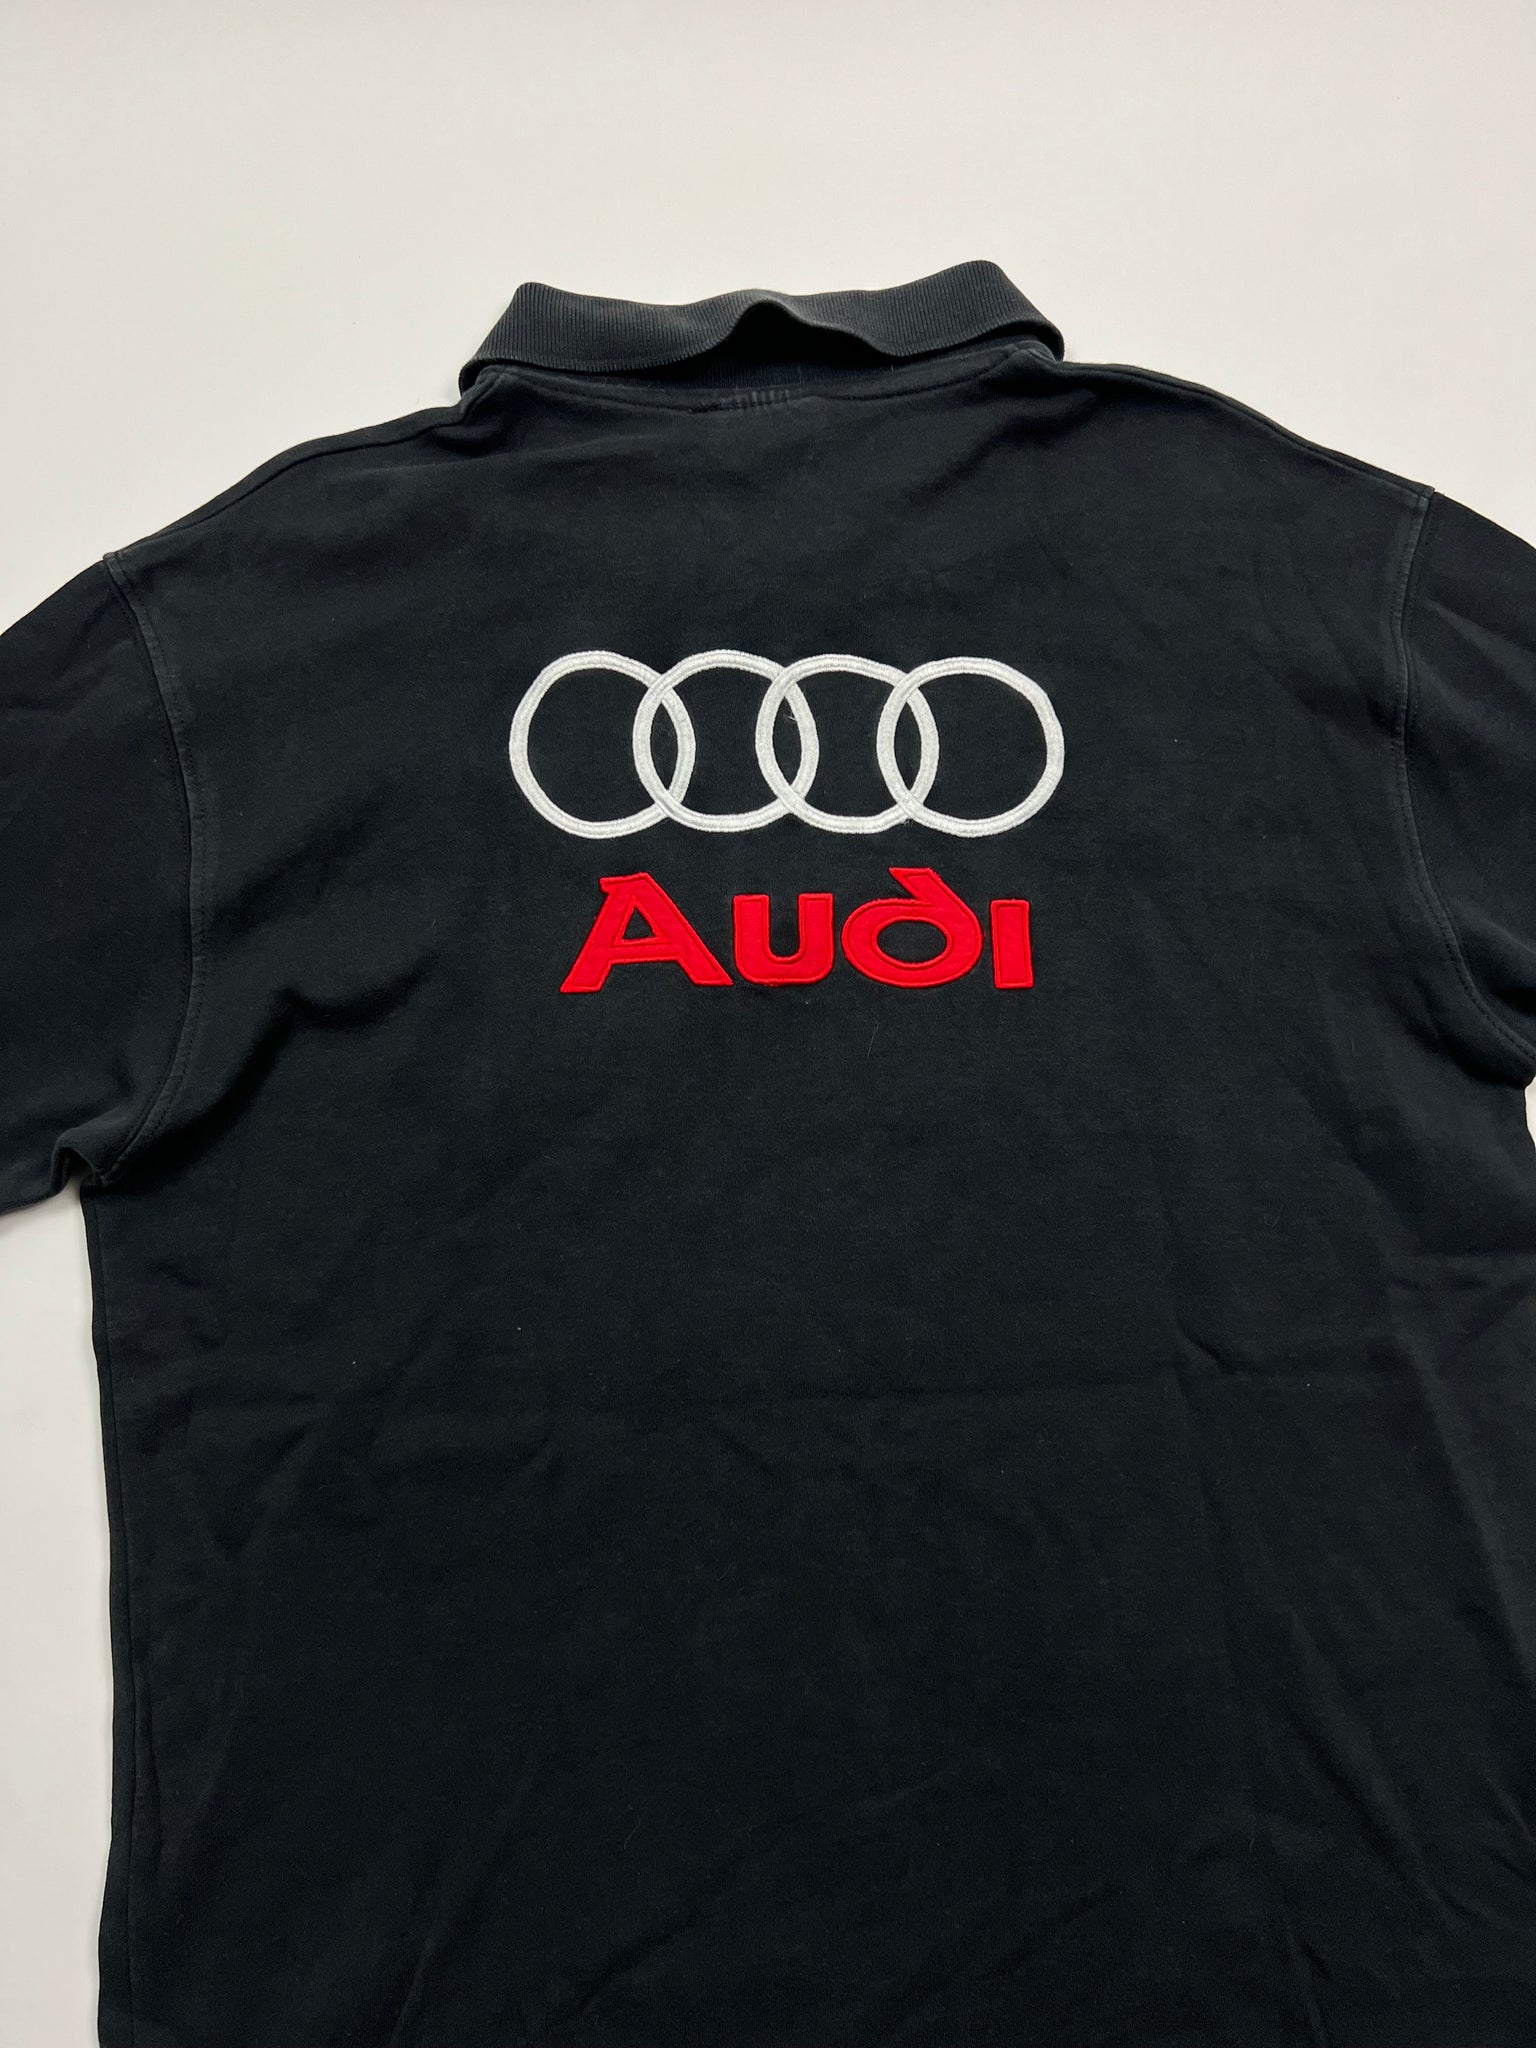 Audi Polo (XL)